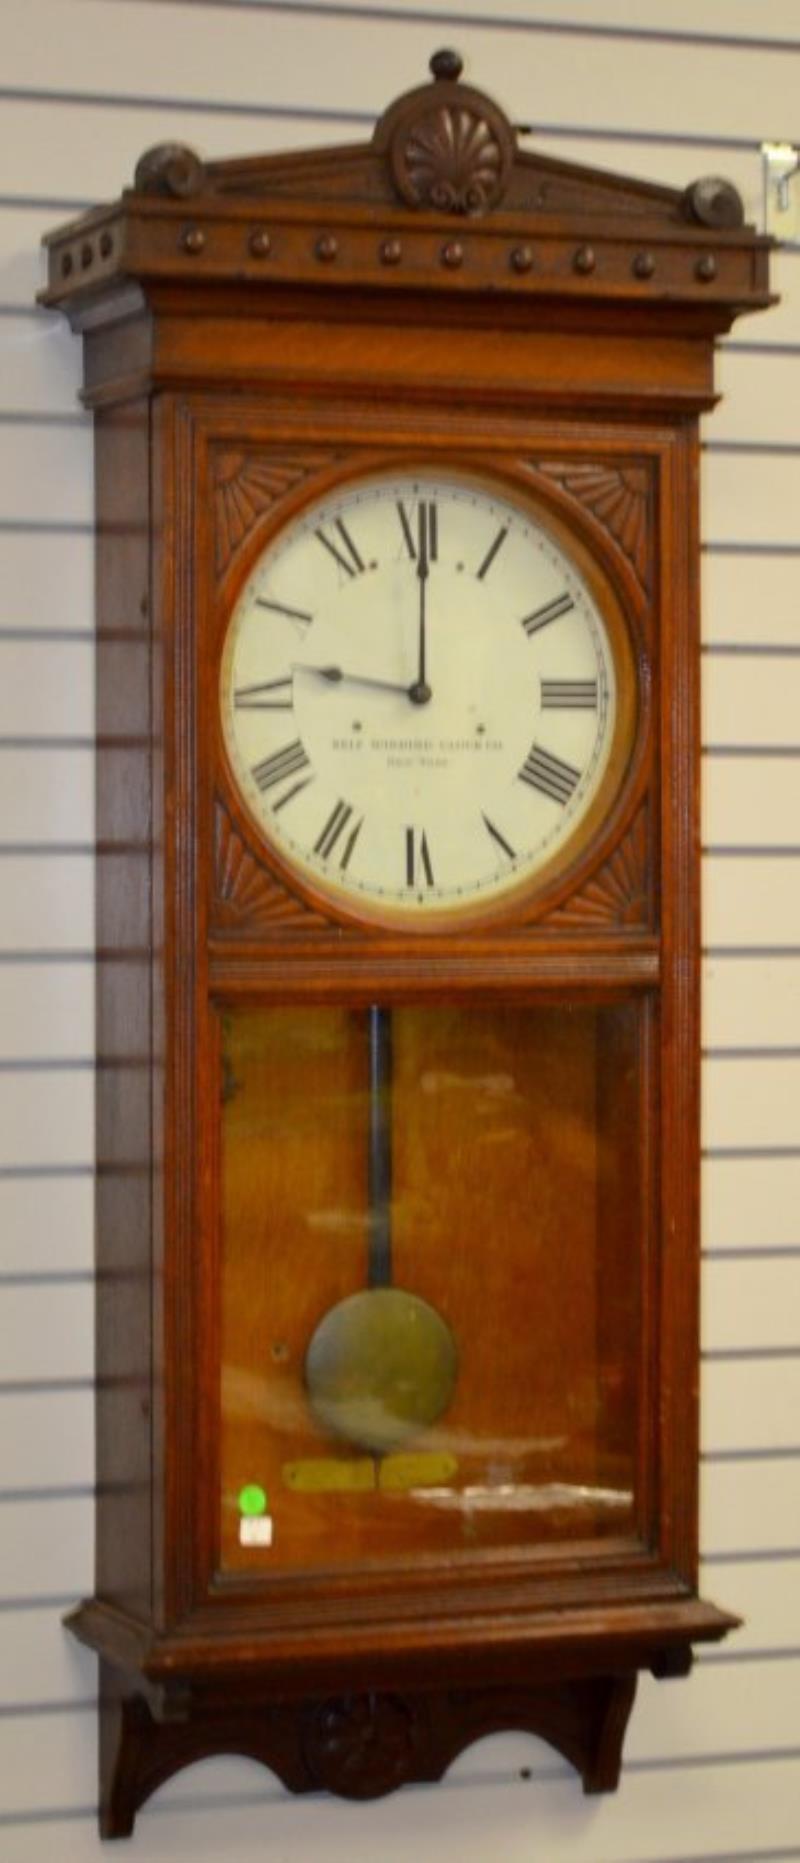 Antique Self-Winding Clock Co. Wall Regulator